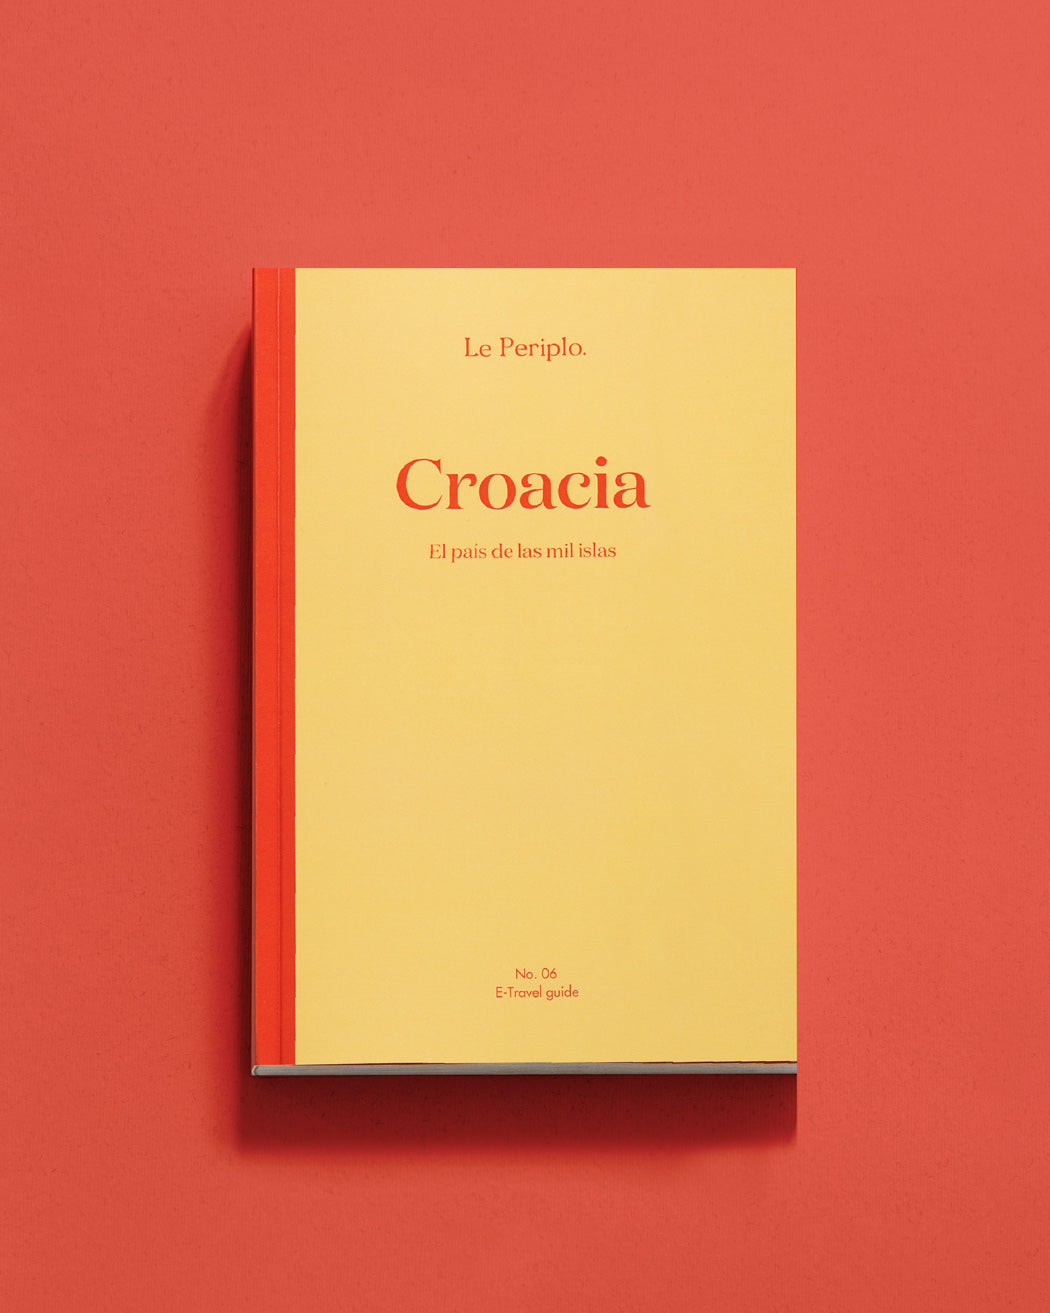 Croatia (printed) Spanish version